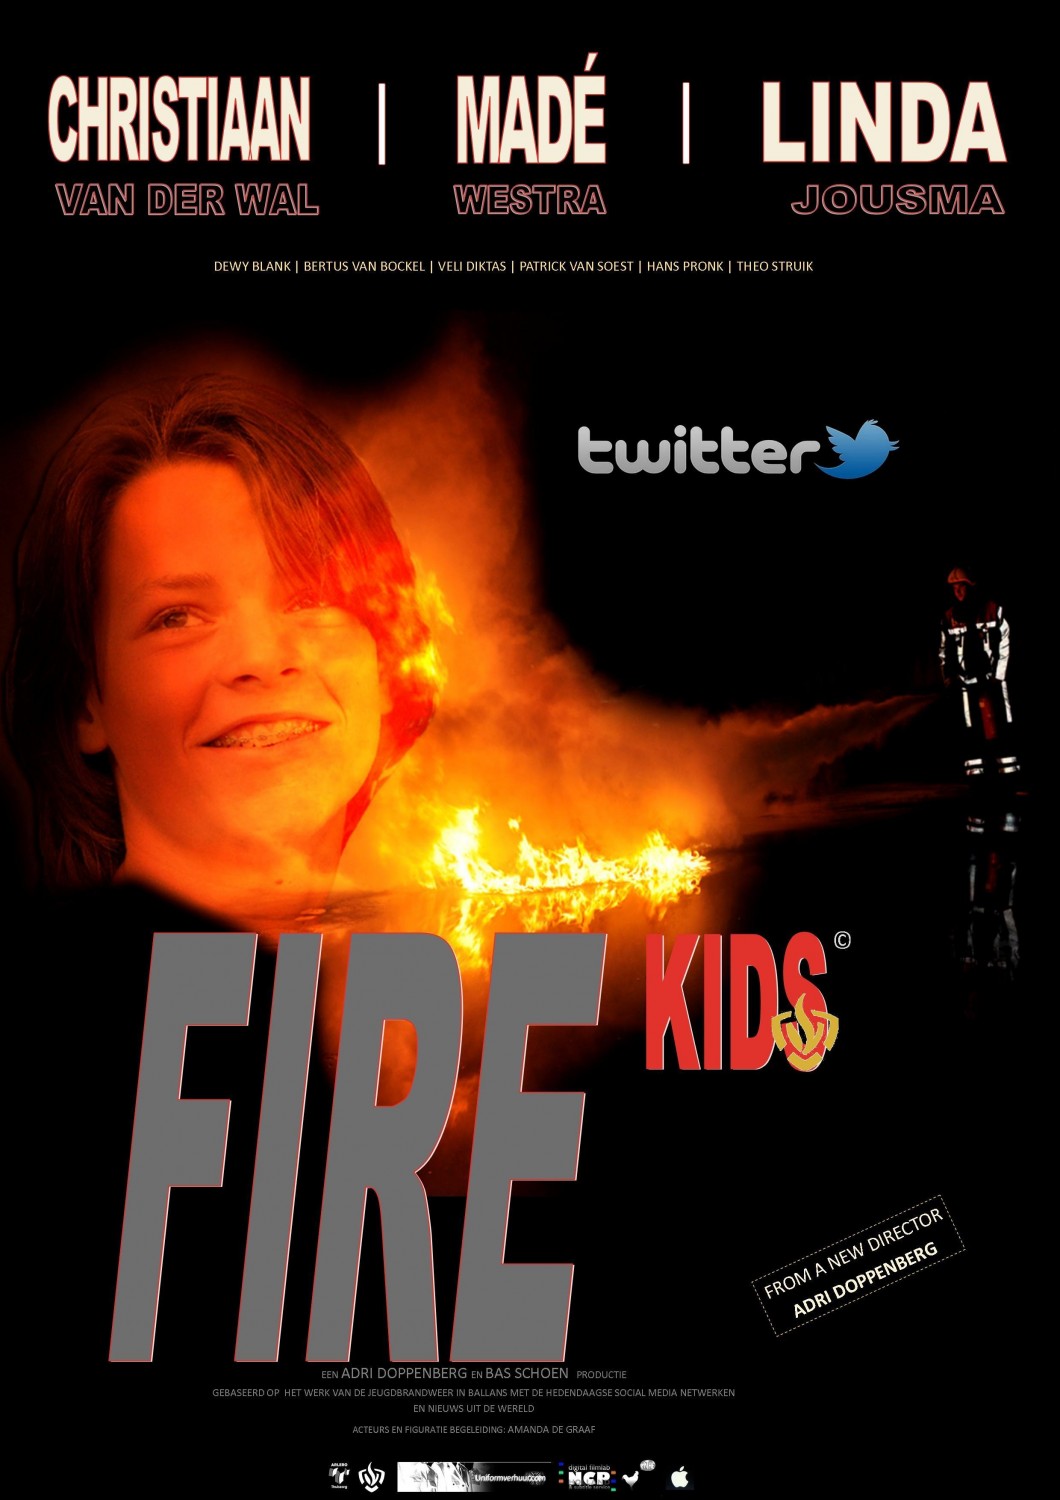 Extra Large Movie Poster Image for firekids de film